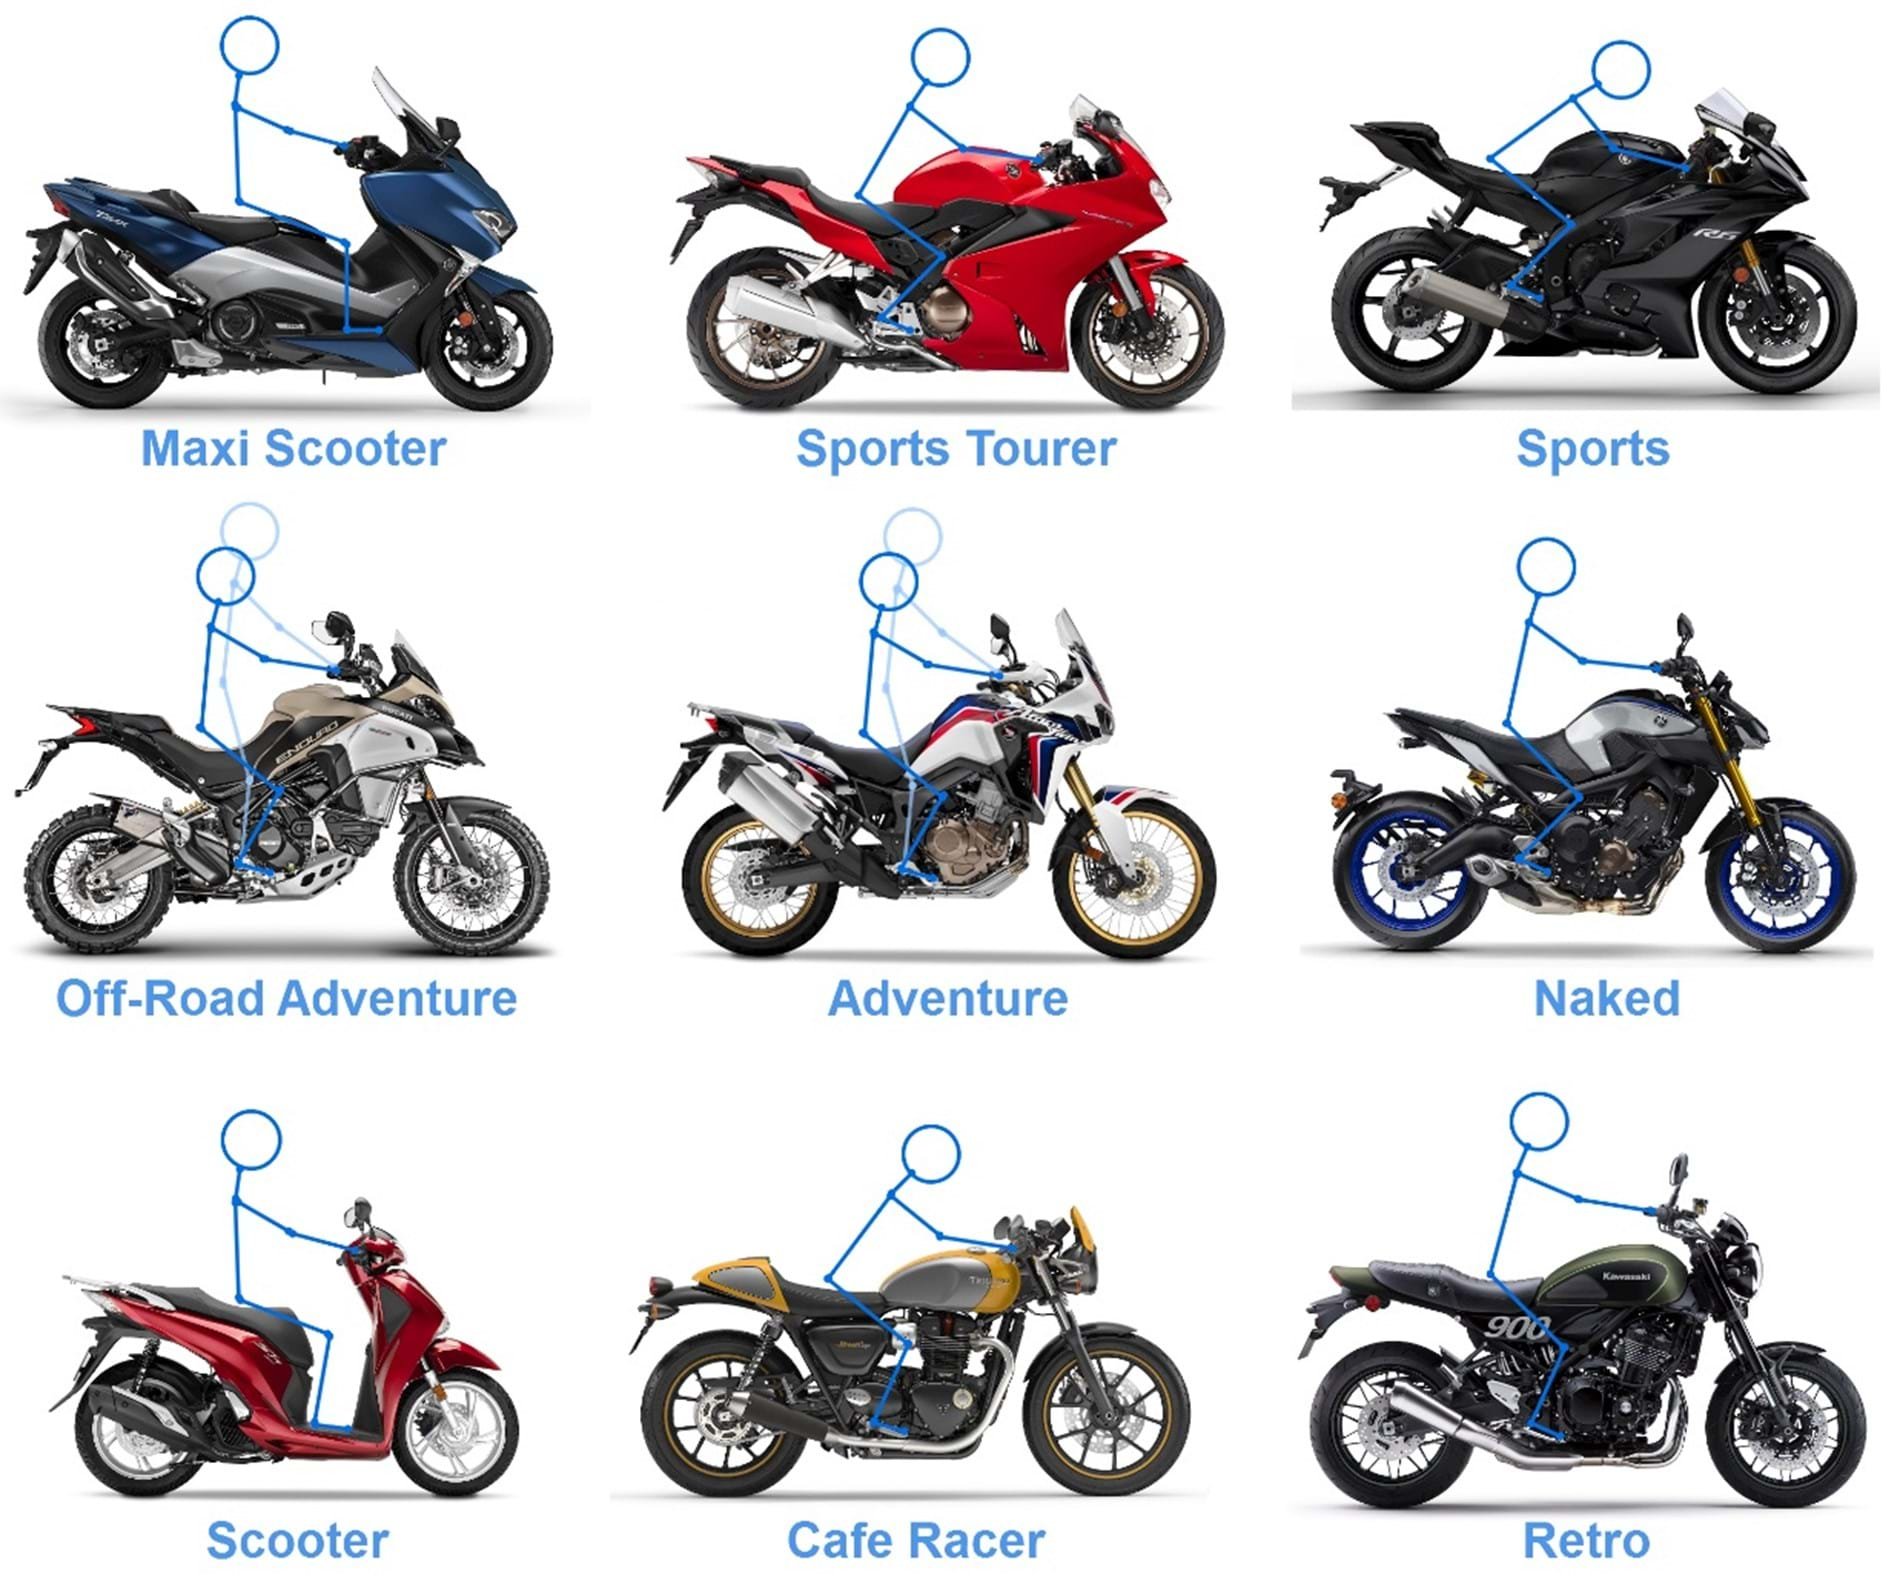 Байки названия. Виды мотоциклов. Классы мотоциклов. Классификация мотоциклов по типу.